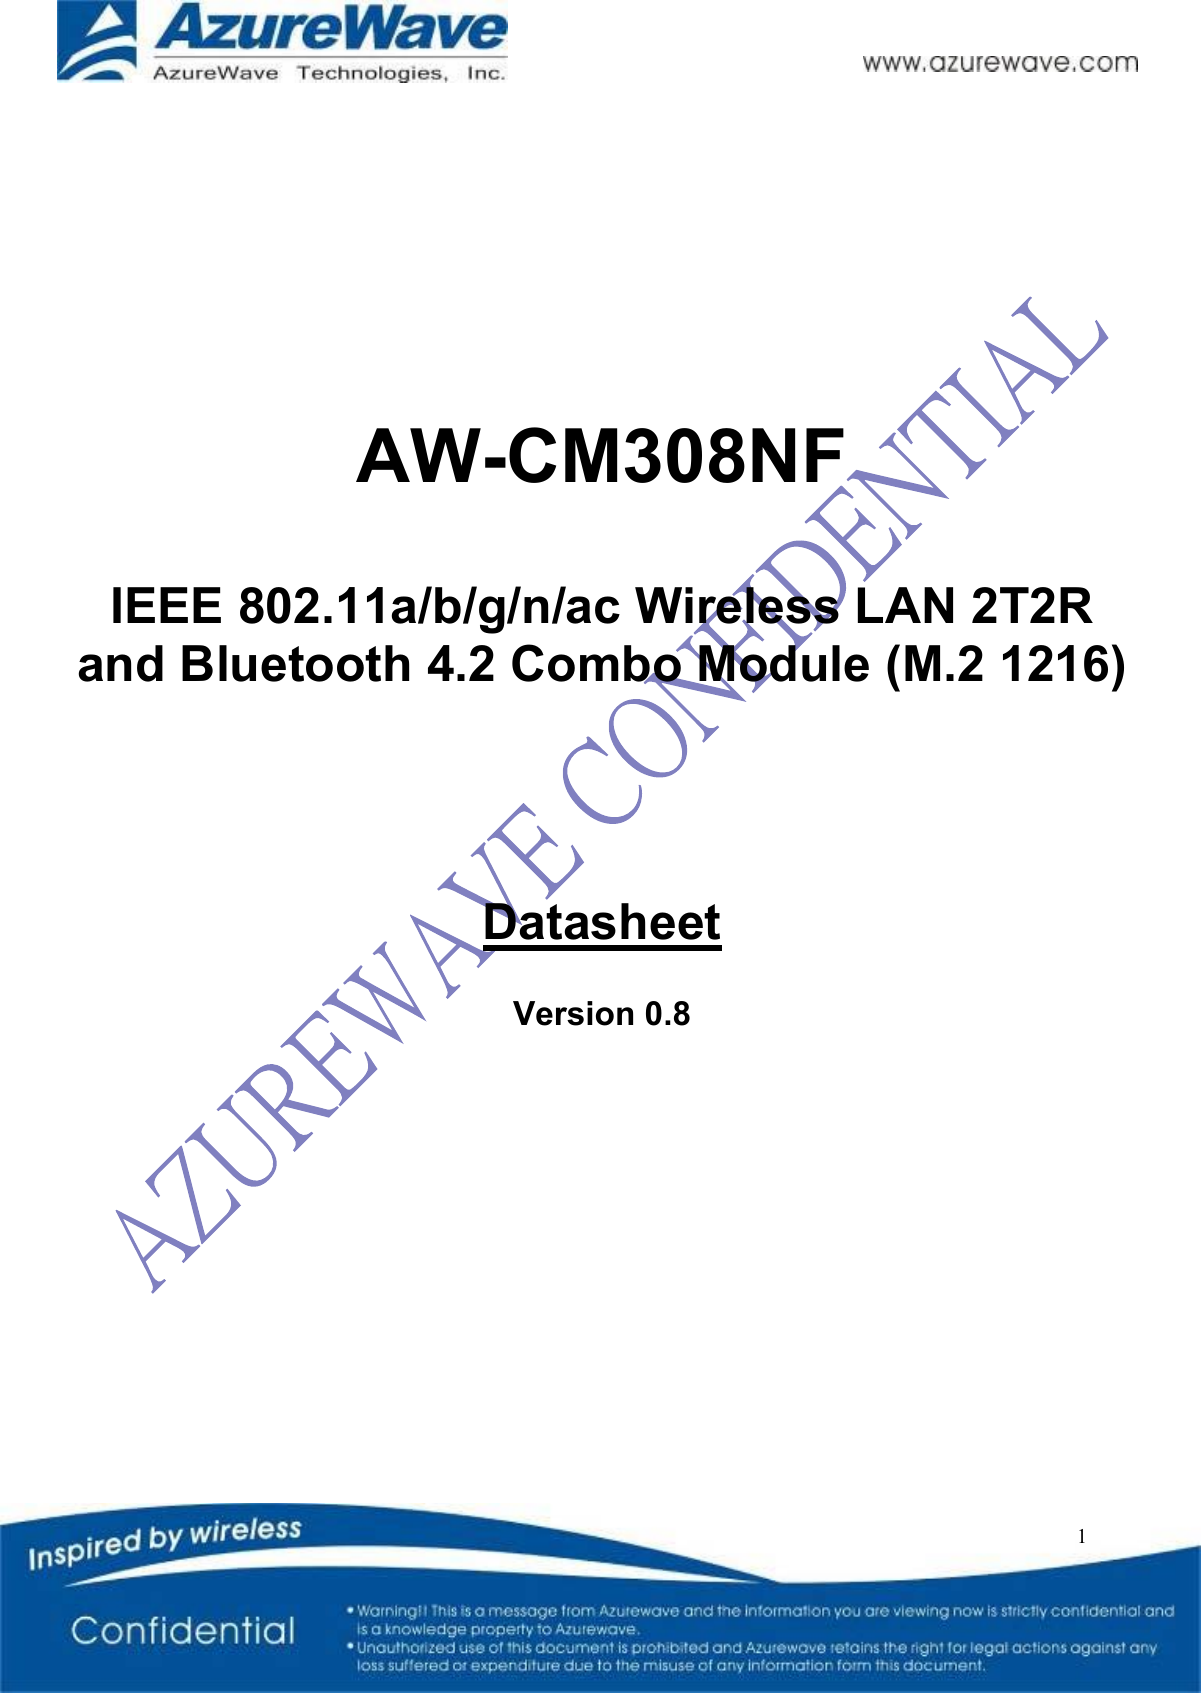   1     AW-CM308NF   IEEE 802.11a/b/g/n/ac Wireless LAN 2T2R and Bluetooth 4.2 Combo Module (M.2 1216)     Datasheet  Version 0.8           